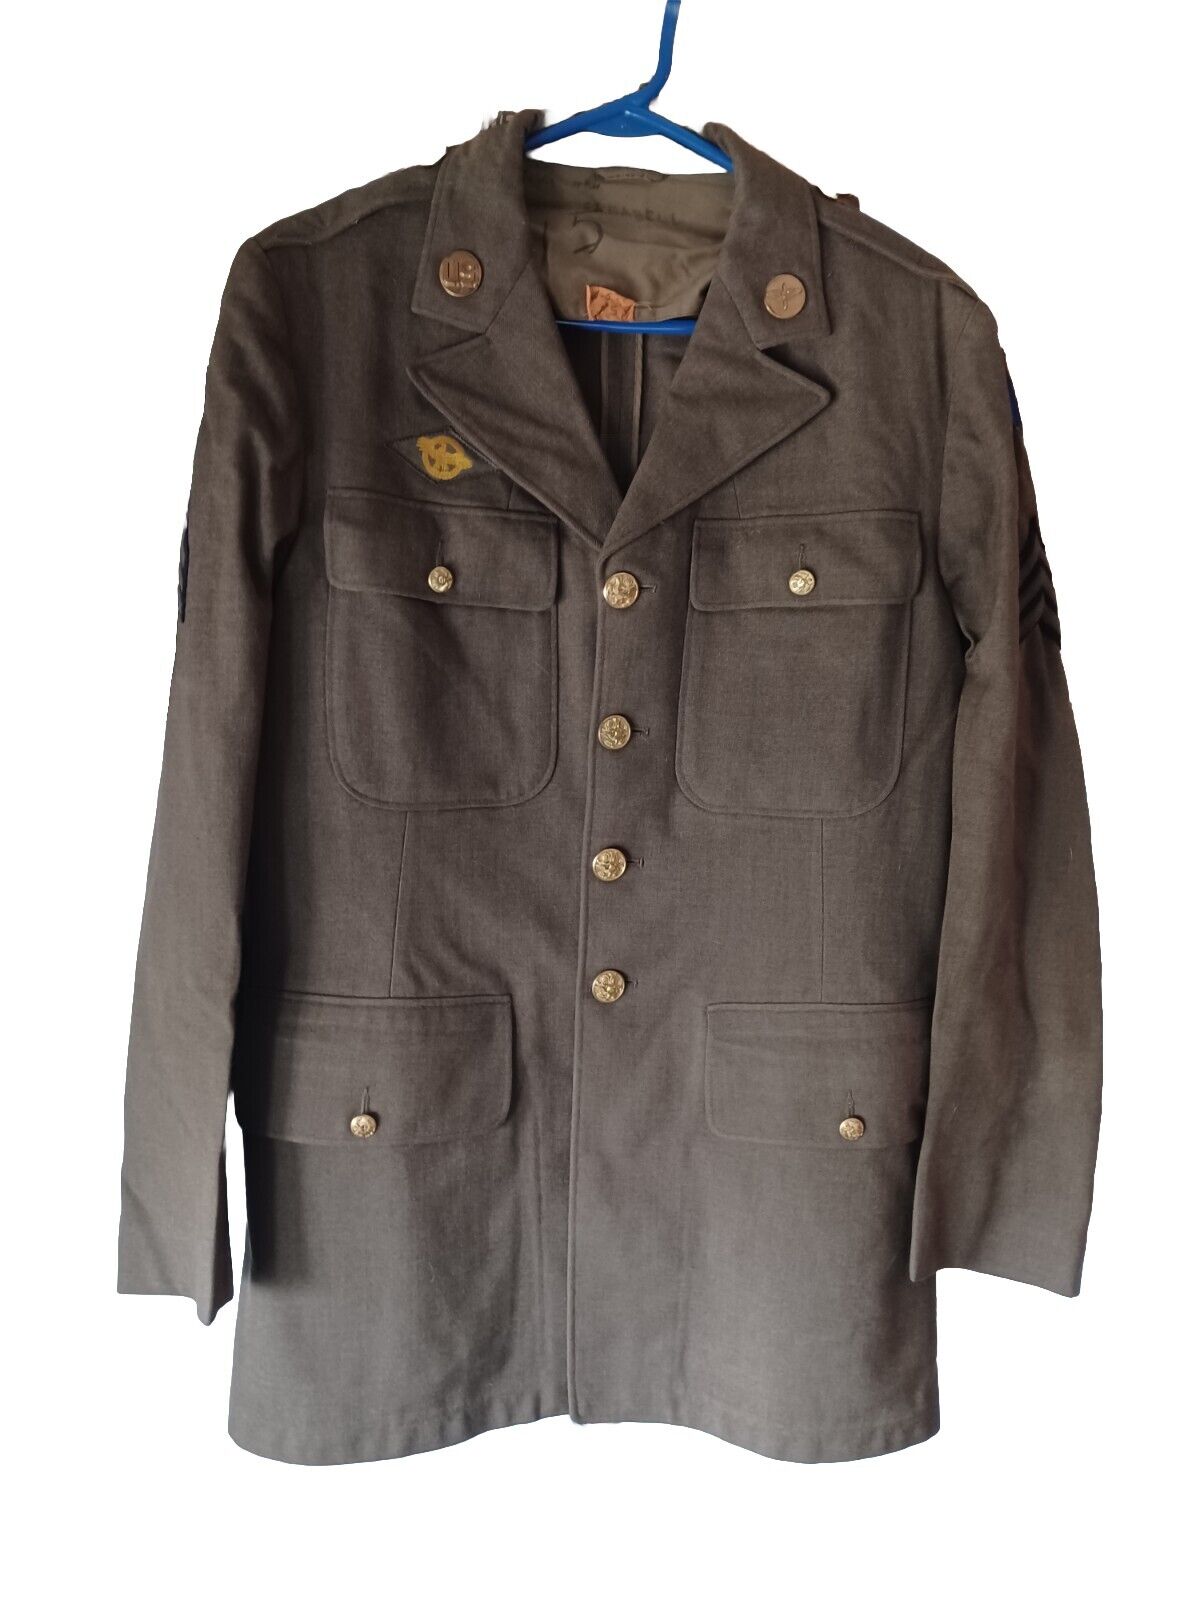 Original WWII USAAF Dress Jacket